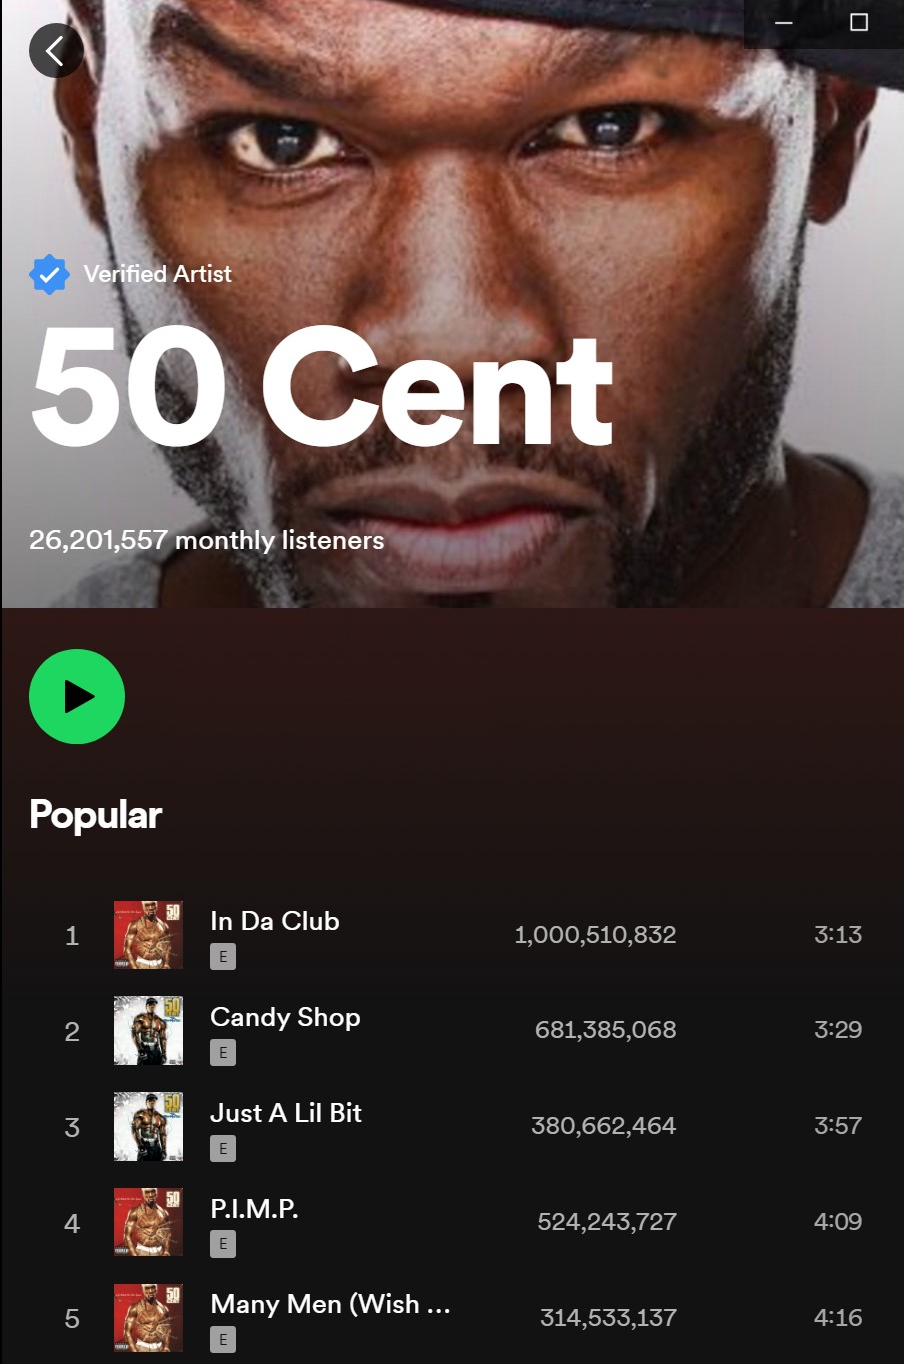 Stream Nas vs OK Go vs 50 Cent - I Can Get Over It In Da Club by chrsmrrtt